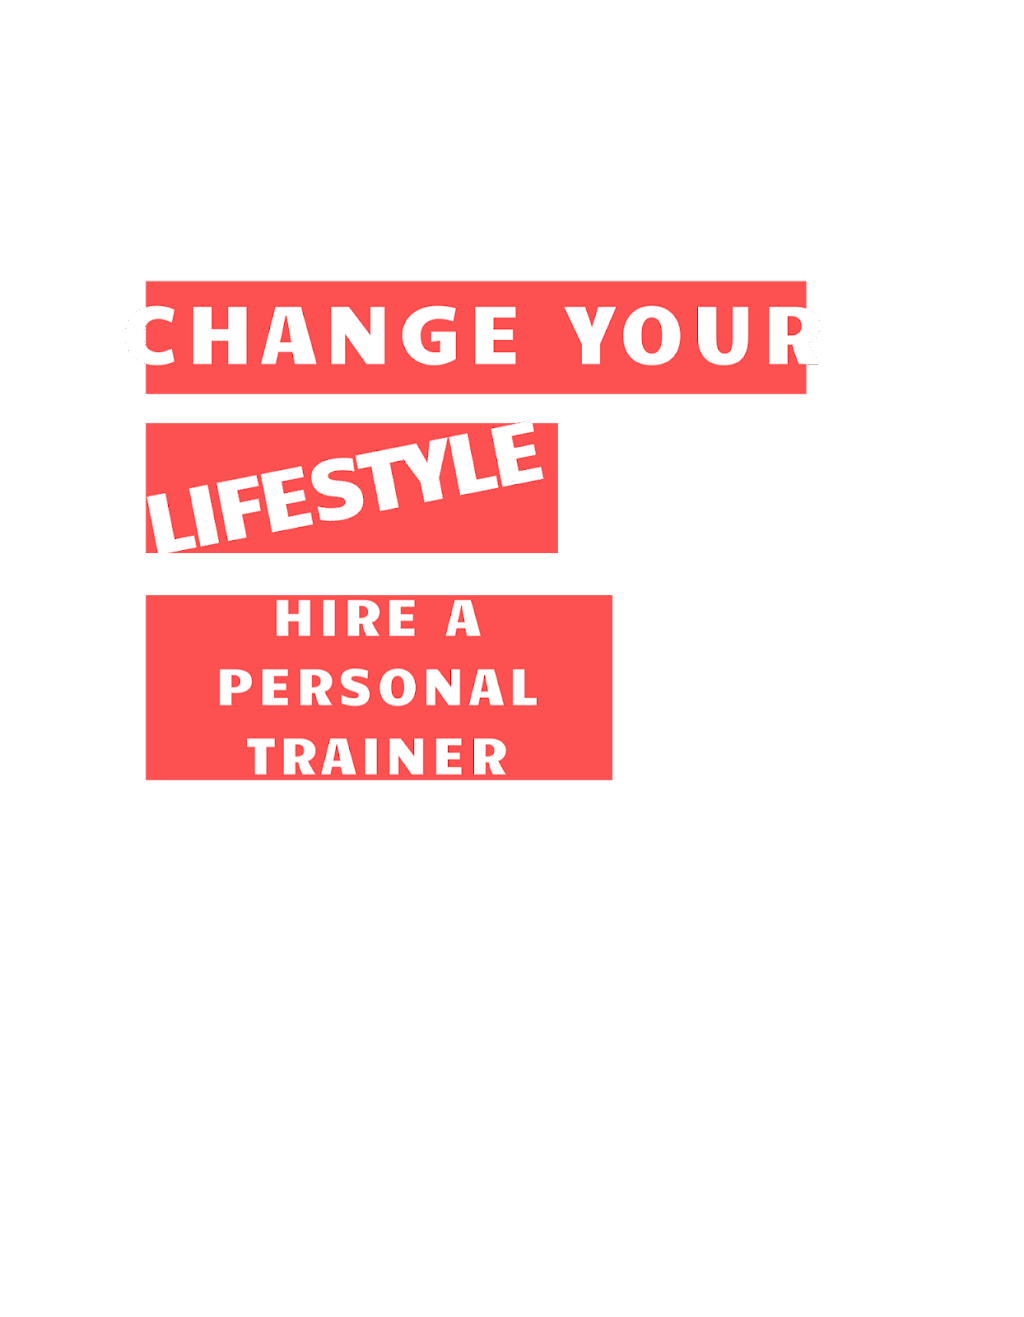 RP’D Fitness Personal Trainer | Aspen Terrace, North Haledon, NJ 07508 | Phone: (201) 957-2942